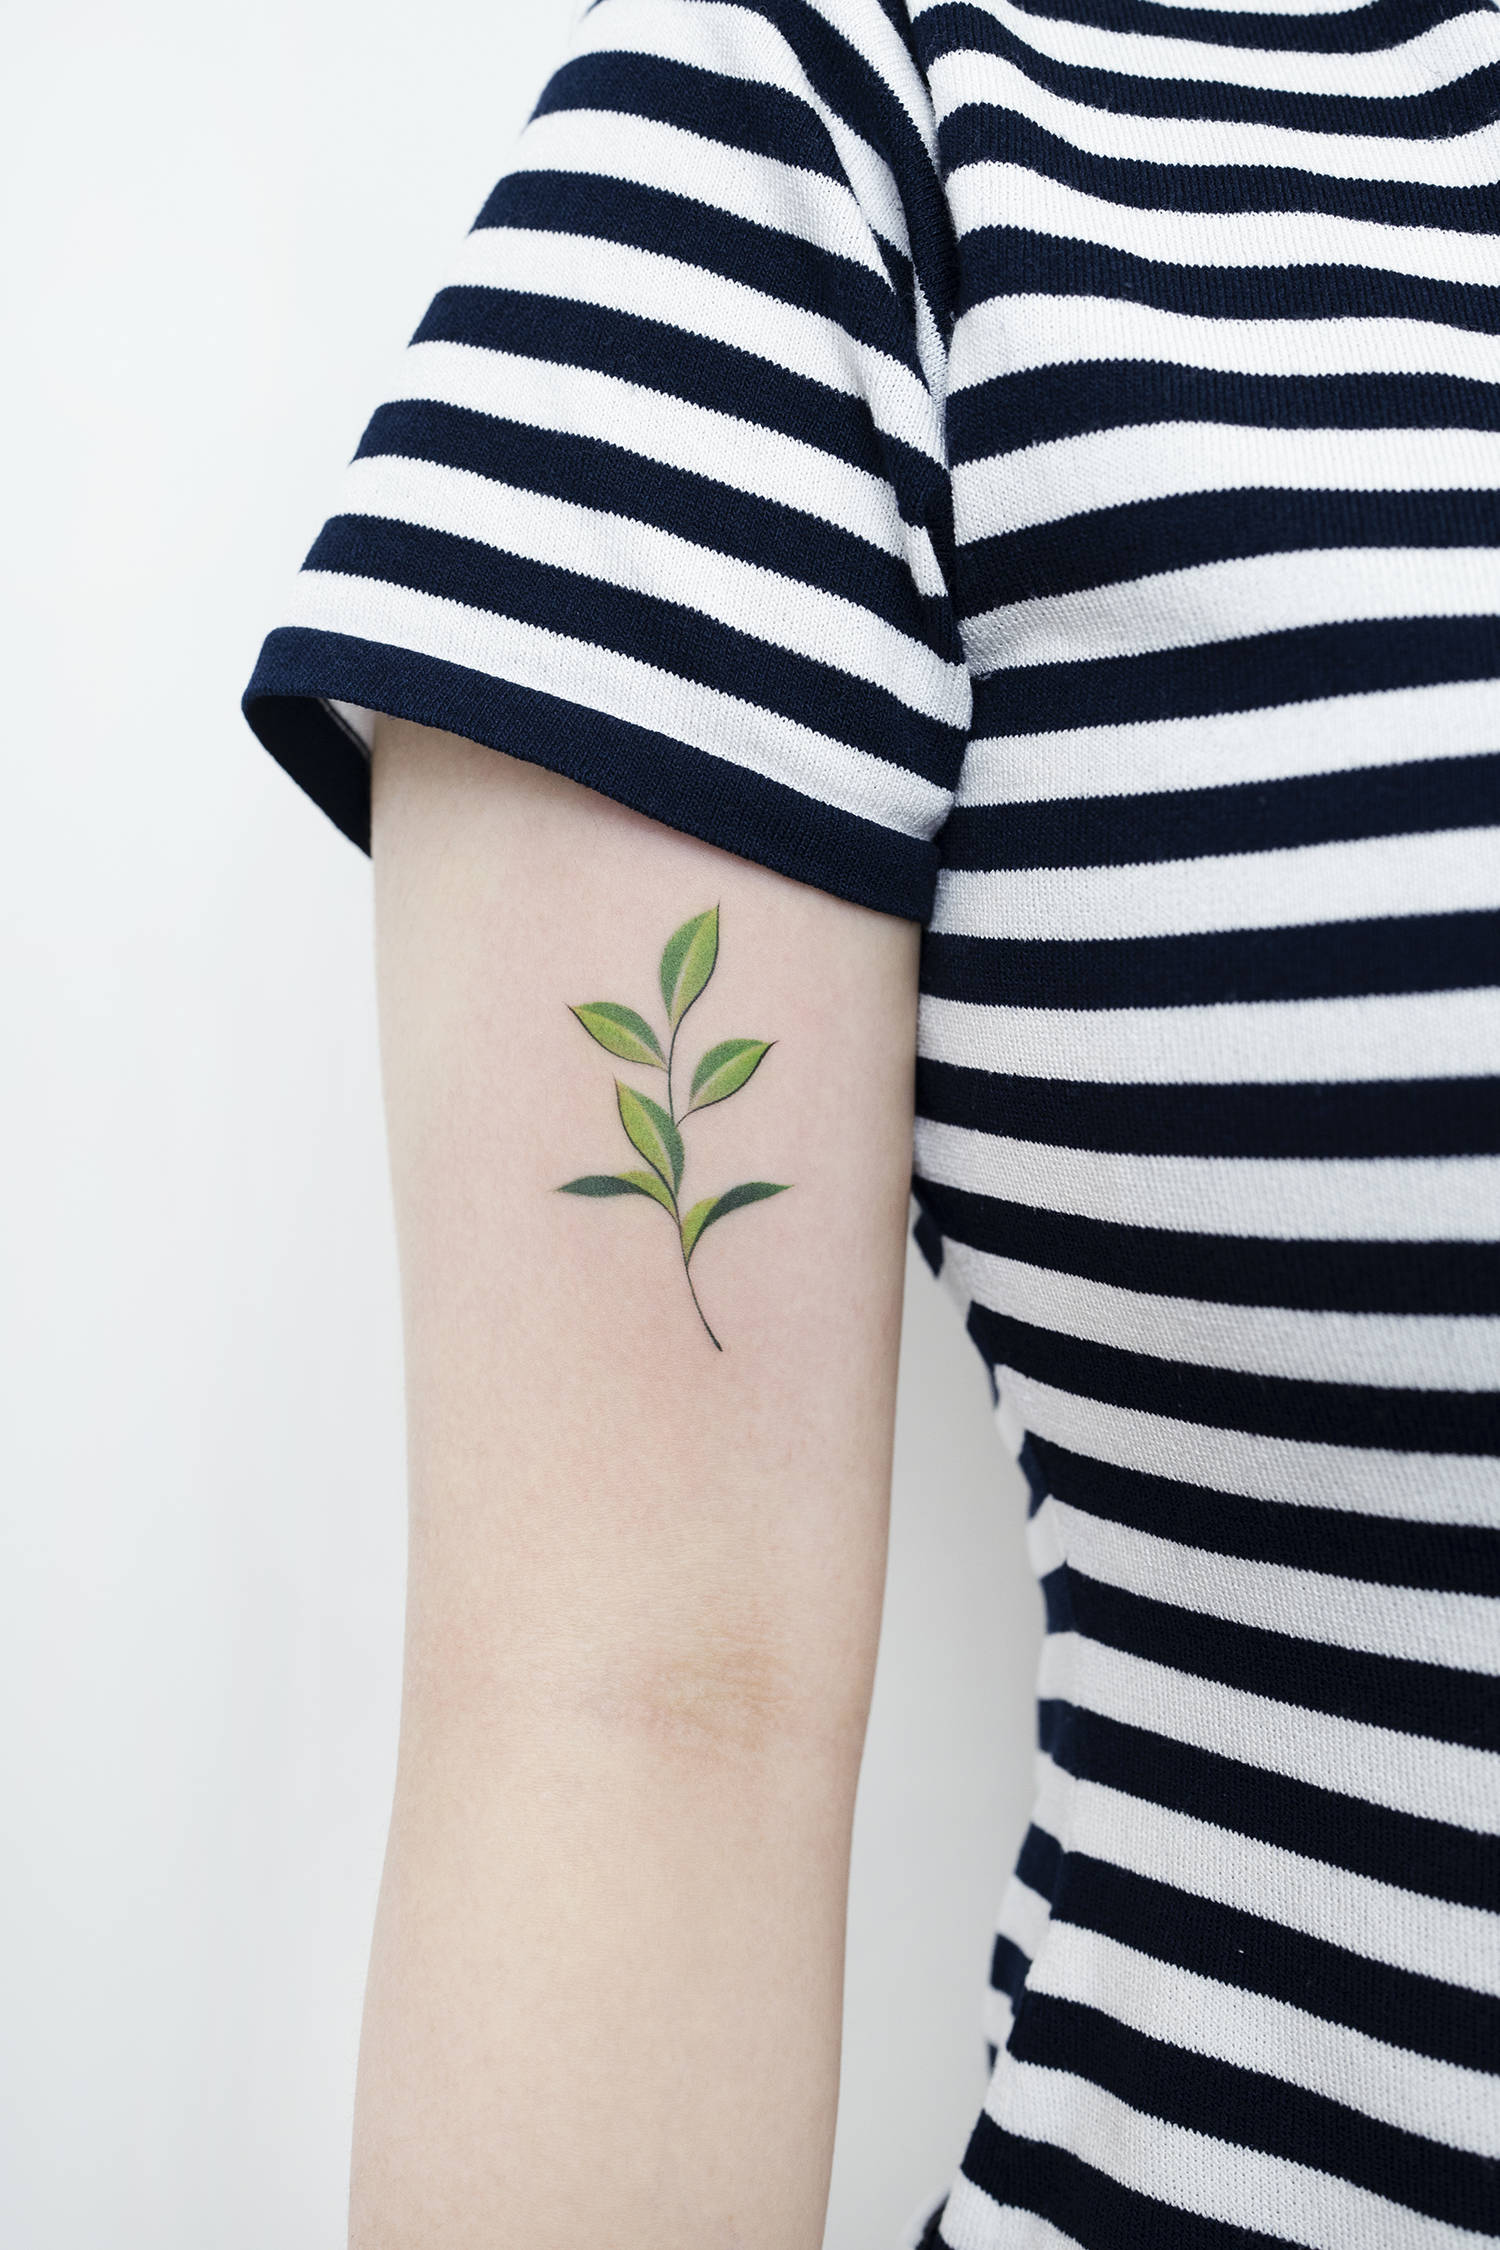 green leaves, tattooed on arm